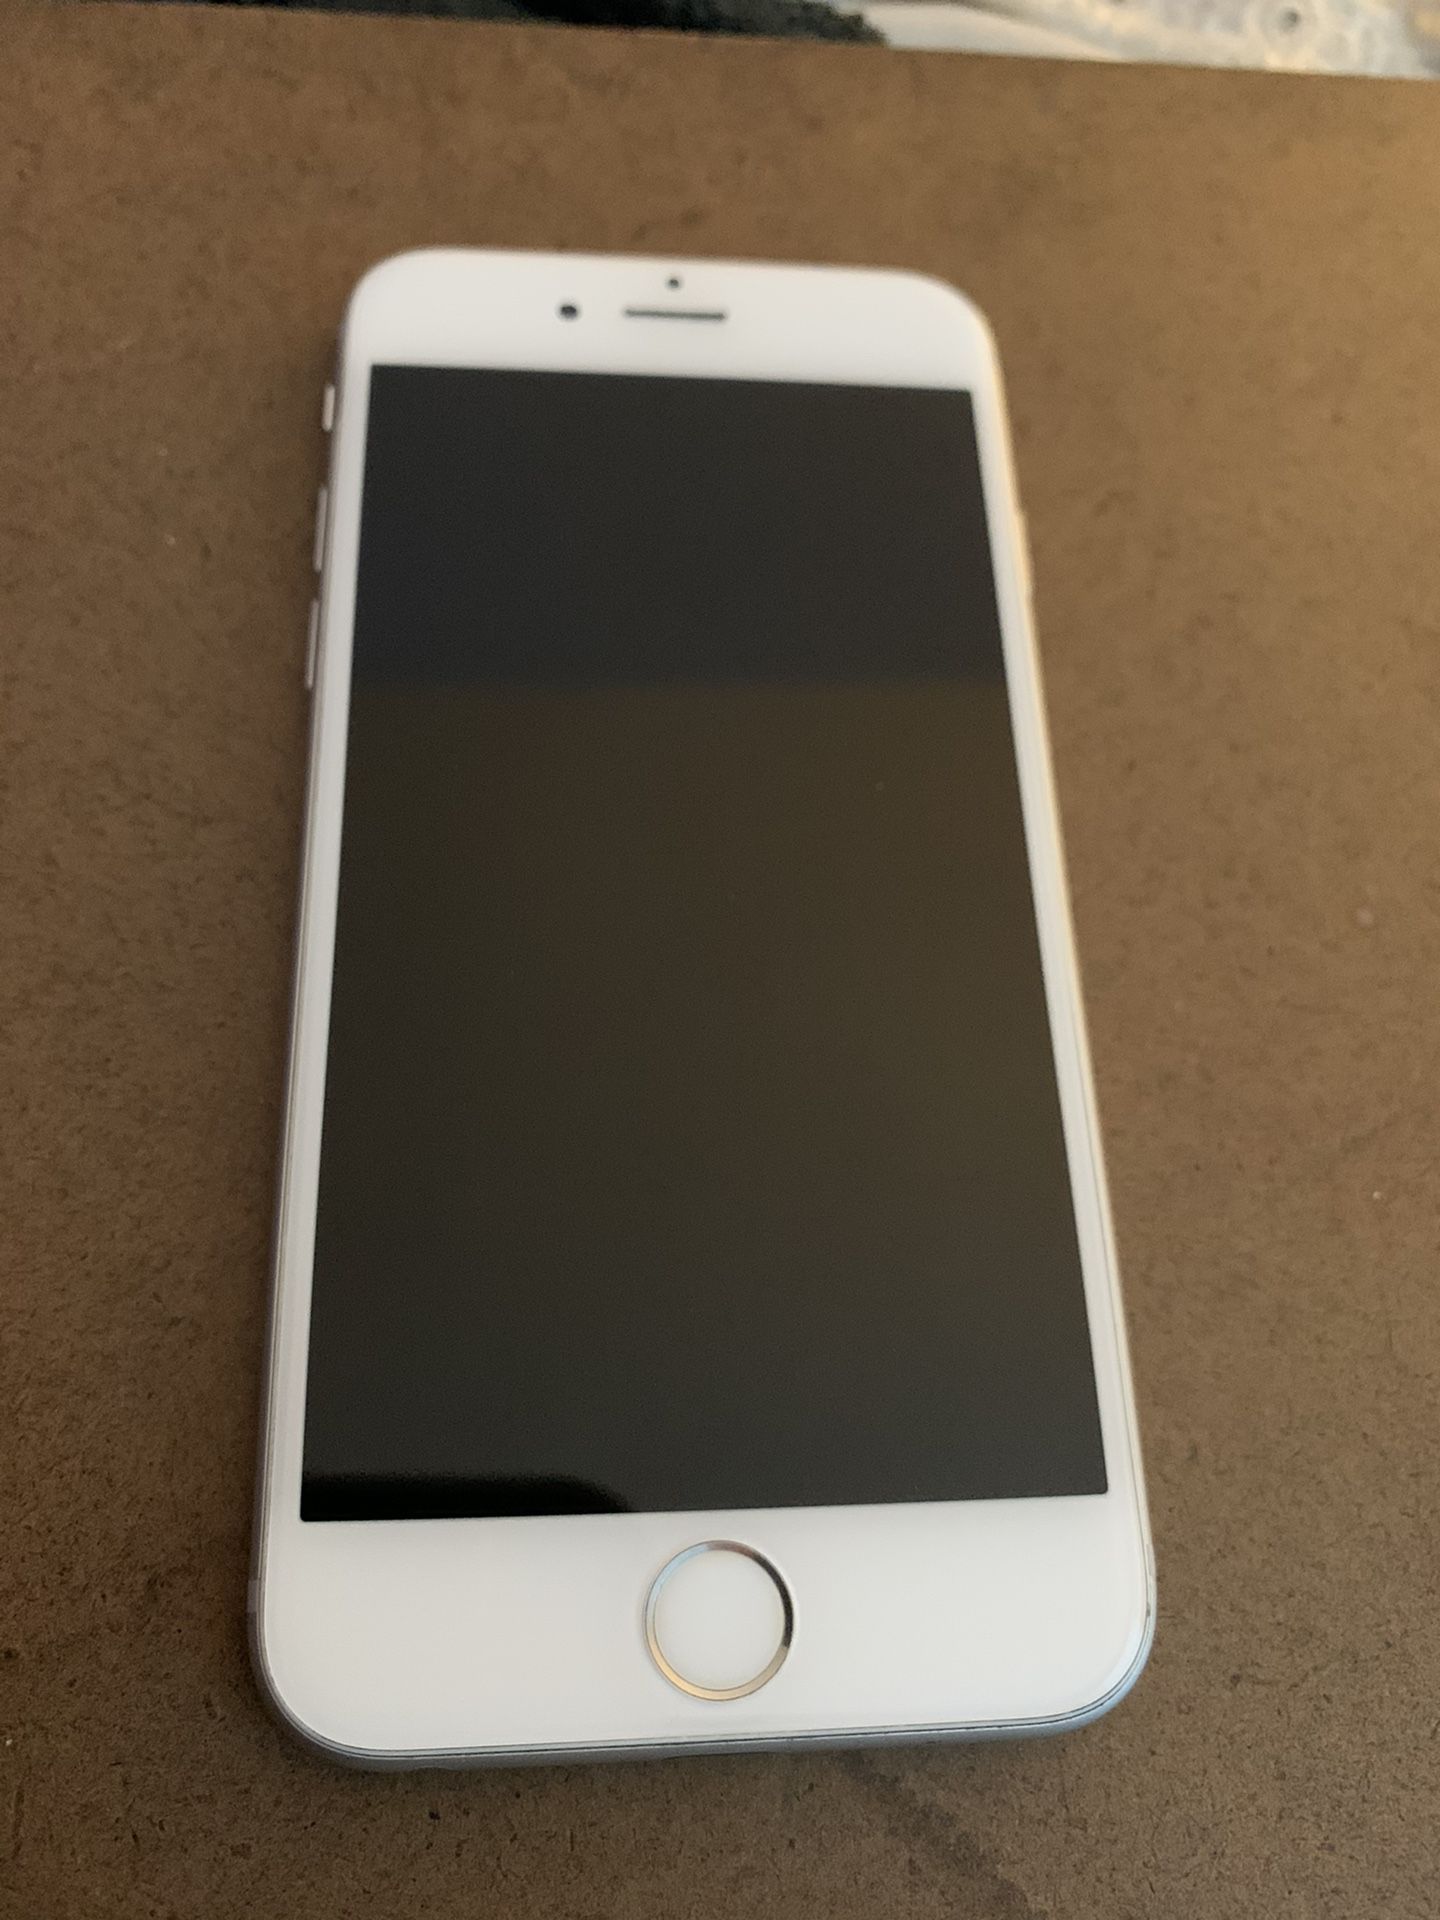 (Pending) Apple iPhone 6s 64GB Factory Unlocked used with Verizon